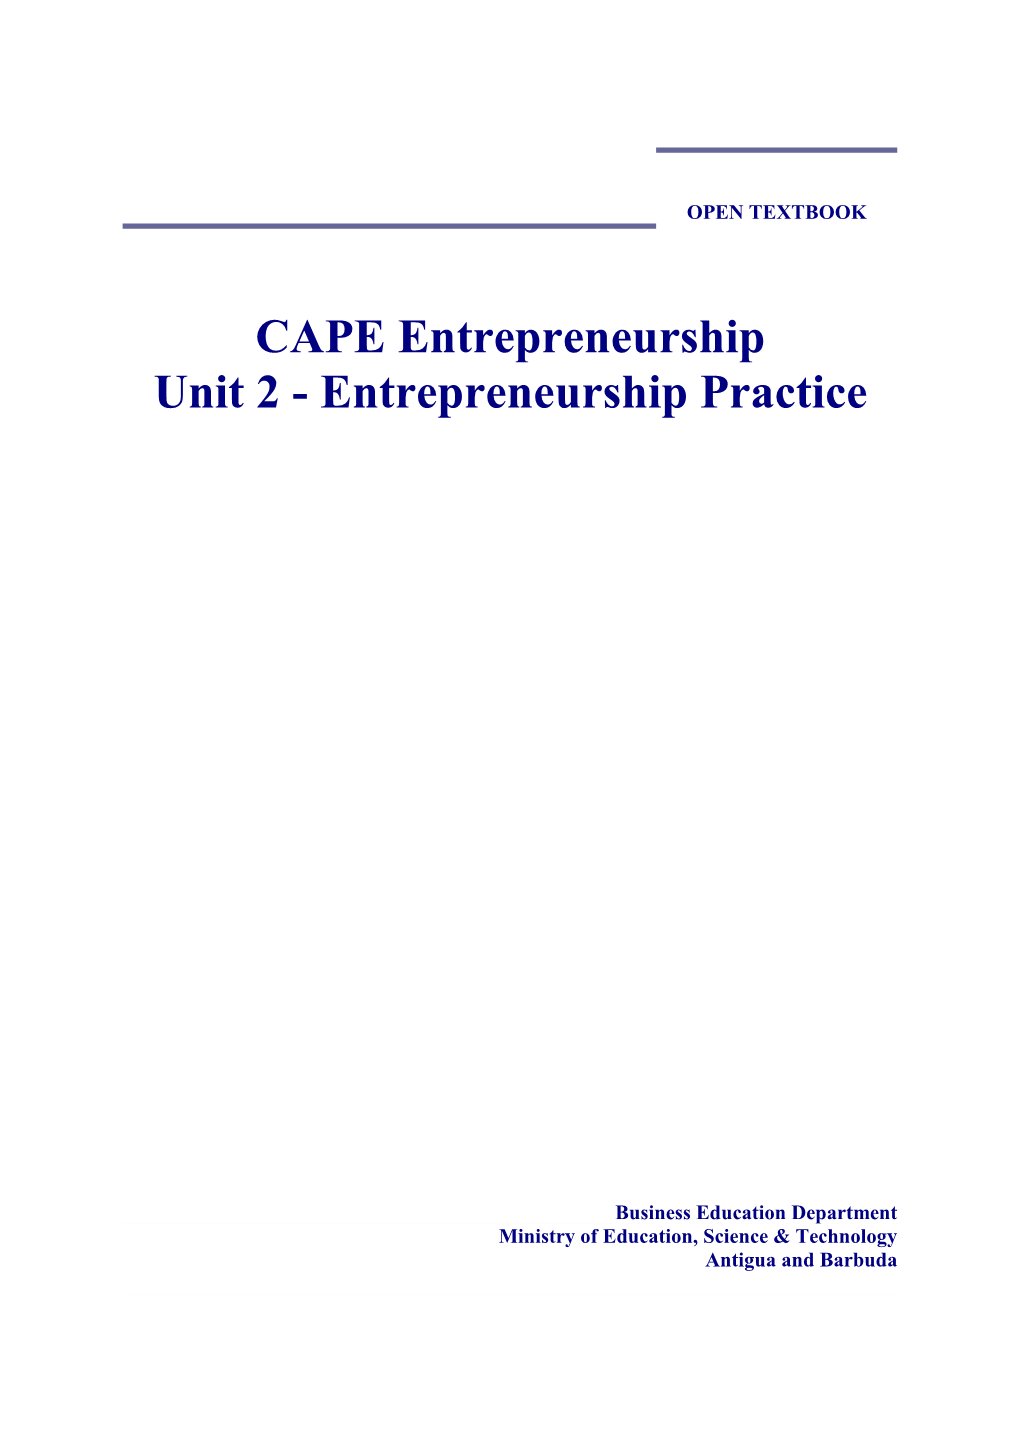 CAPE Entrepreneurship Unit 2 - Entrepreneurship Practice